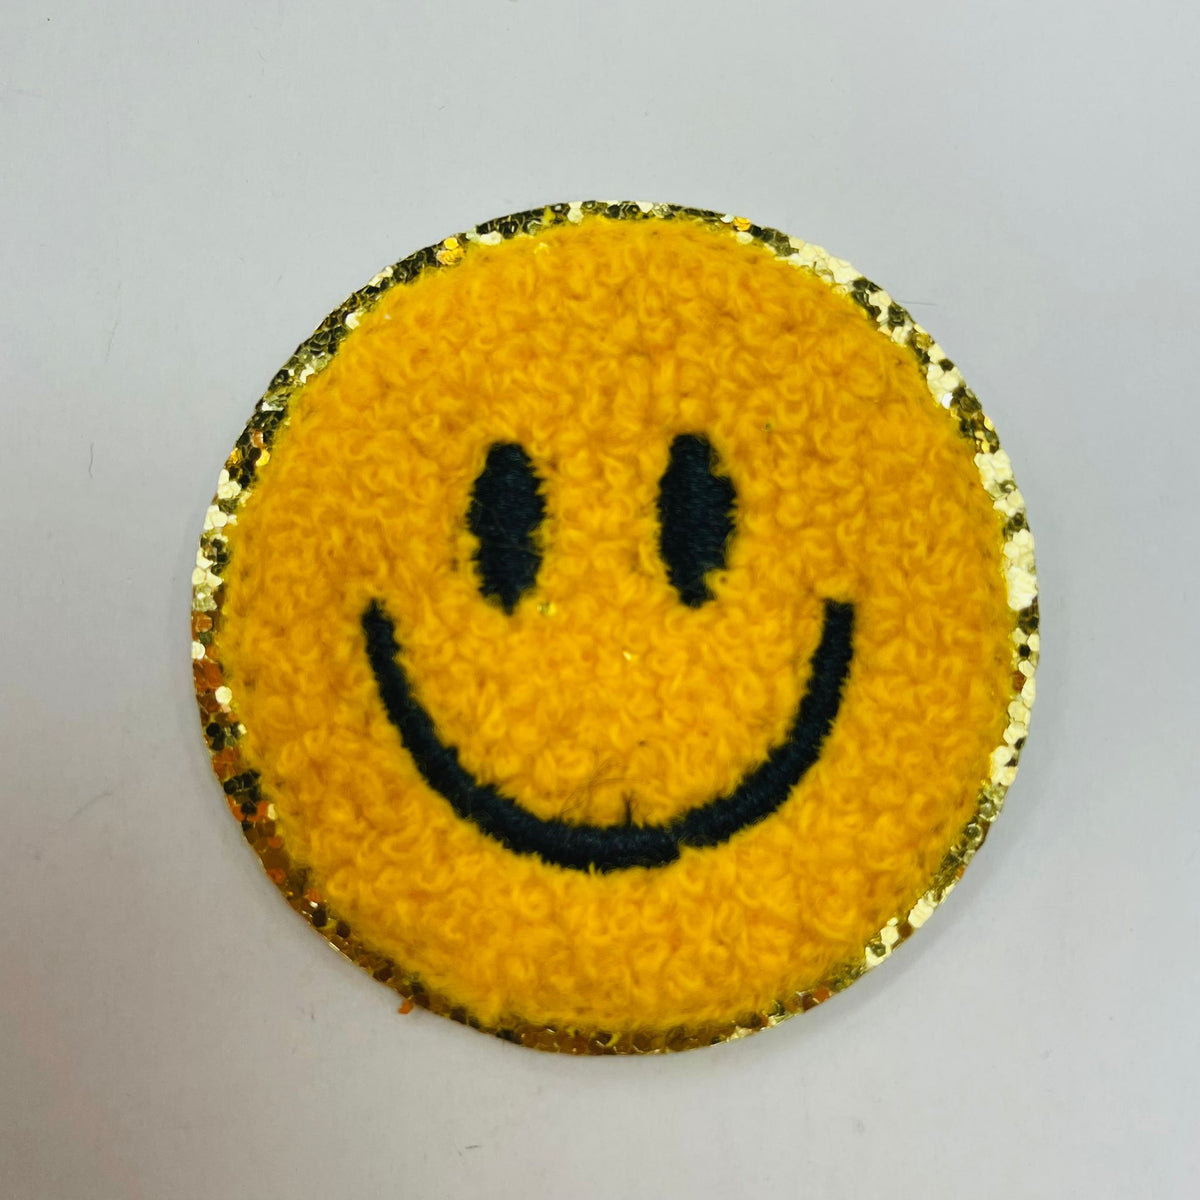 Parche adhesivo autoadhesivo con cara sonriente